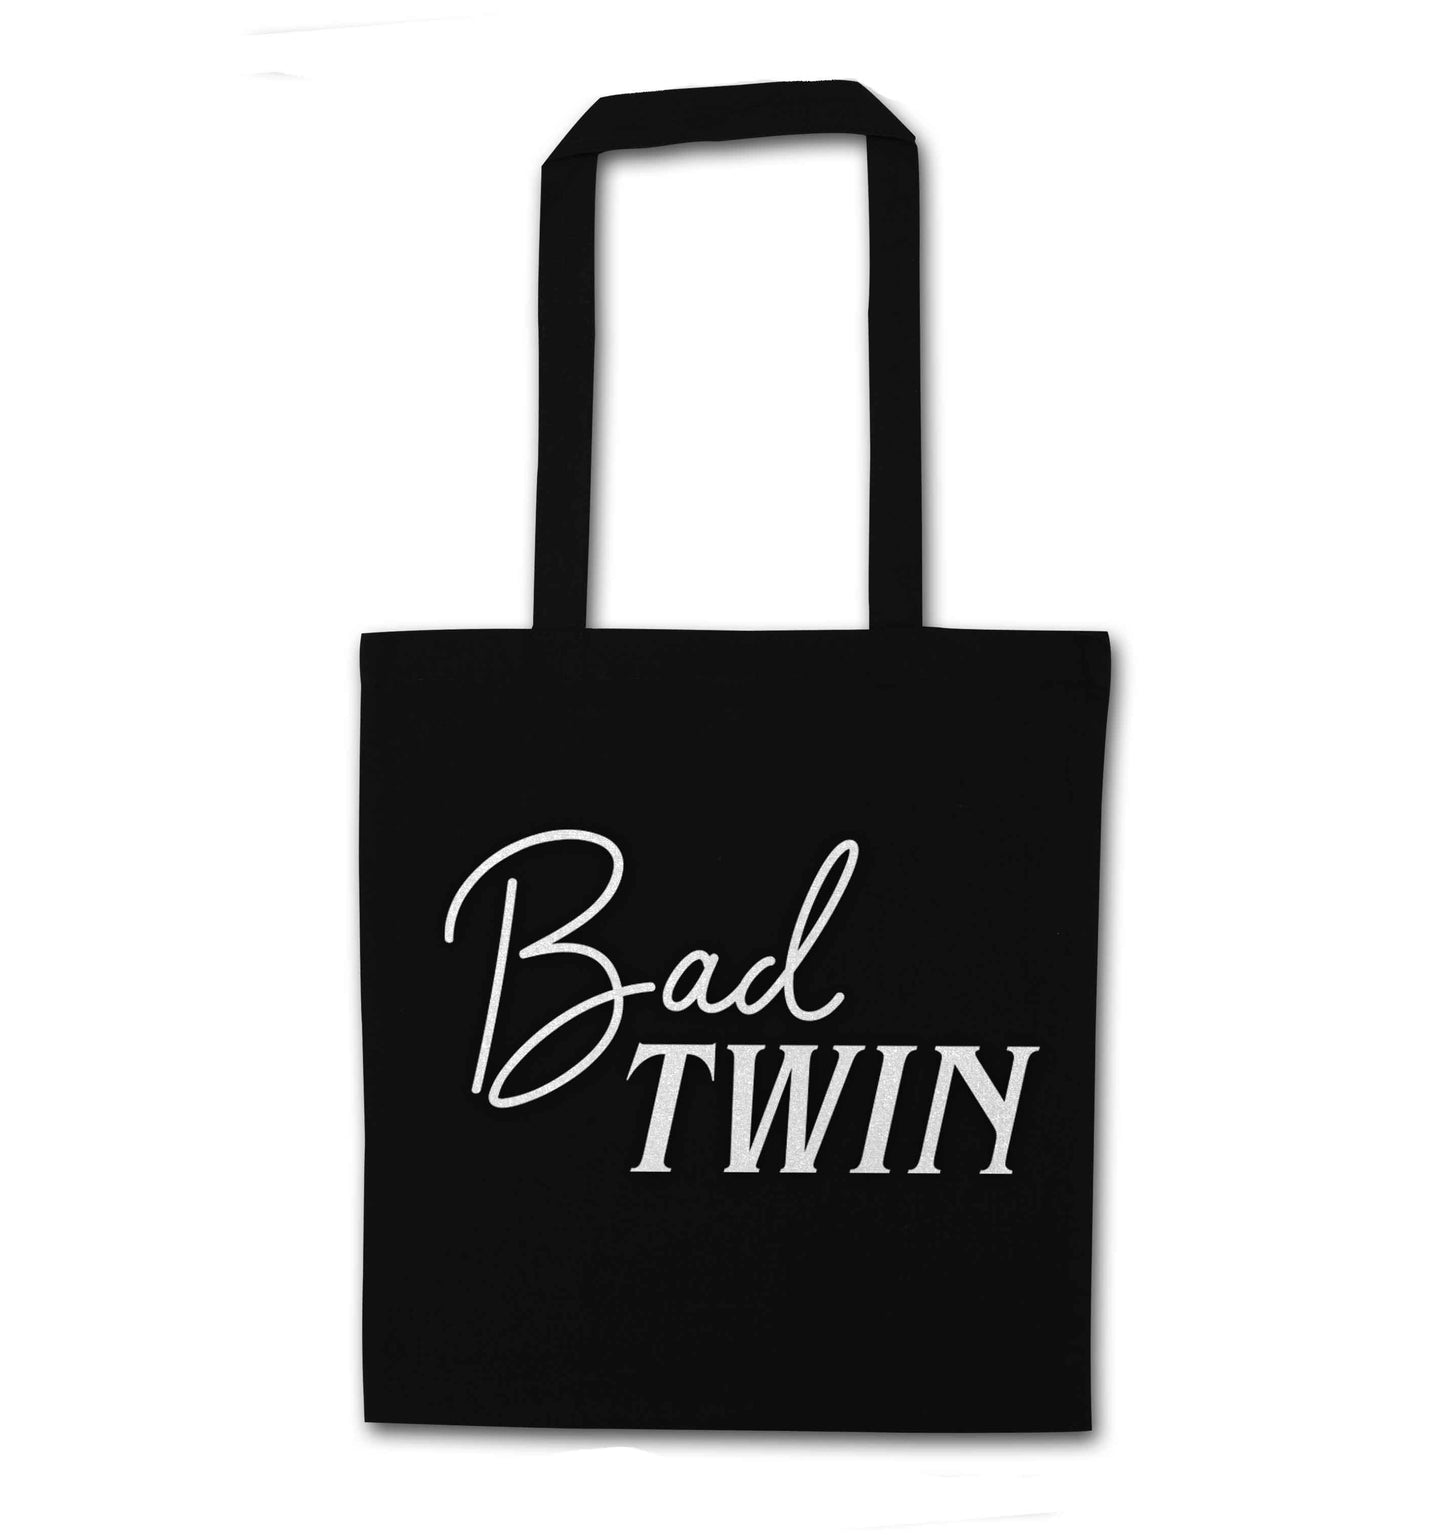 Bad twin black tote bag